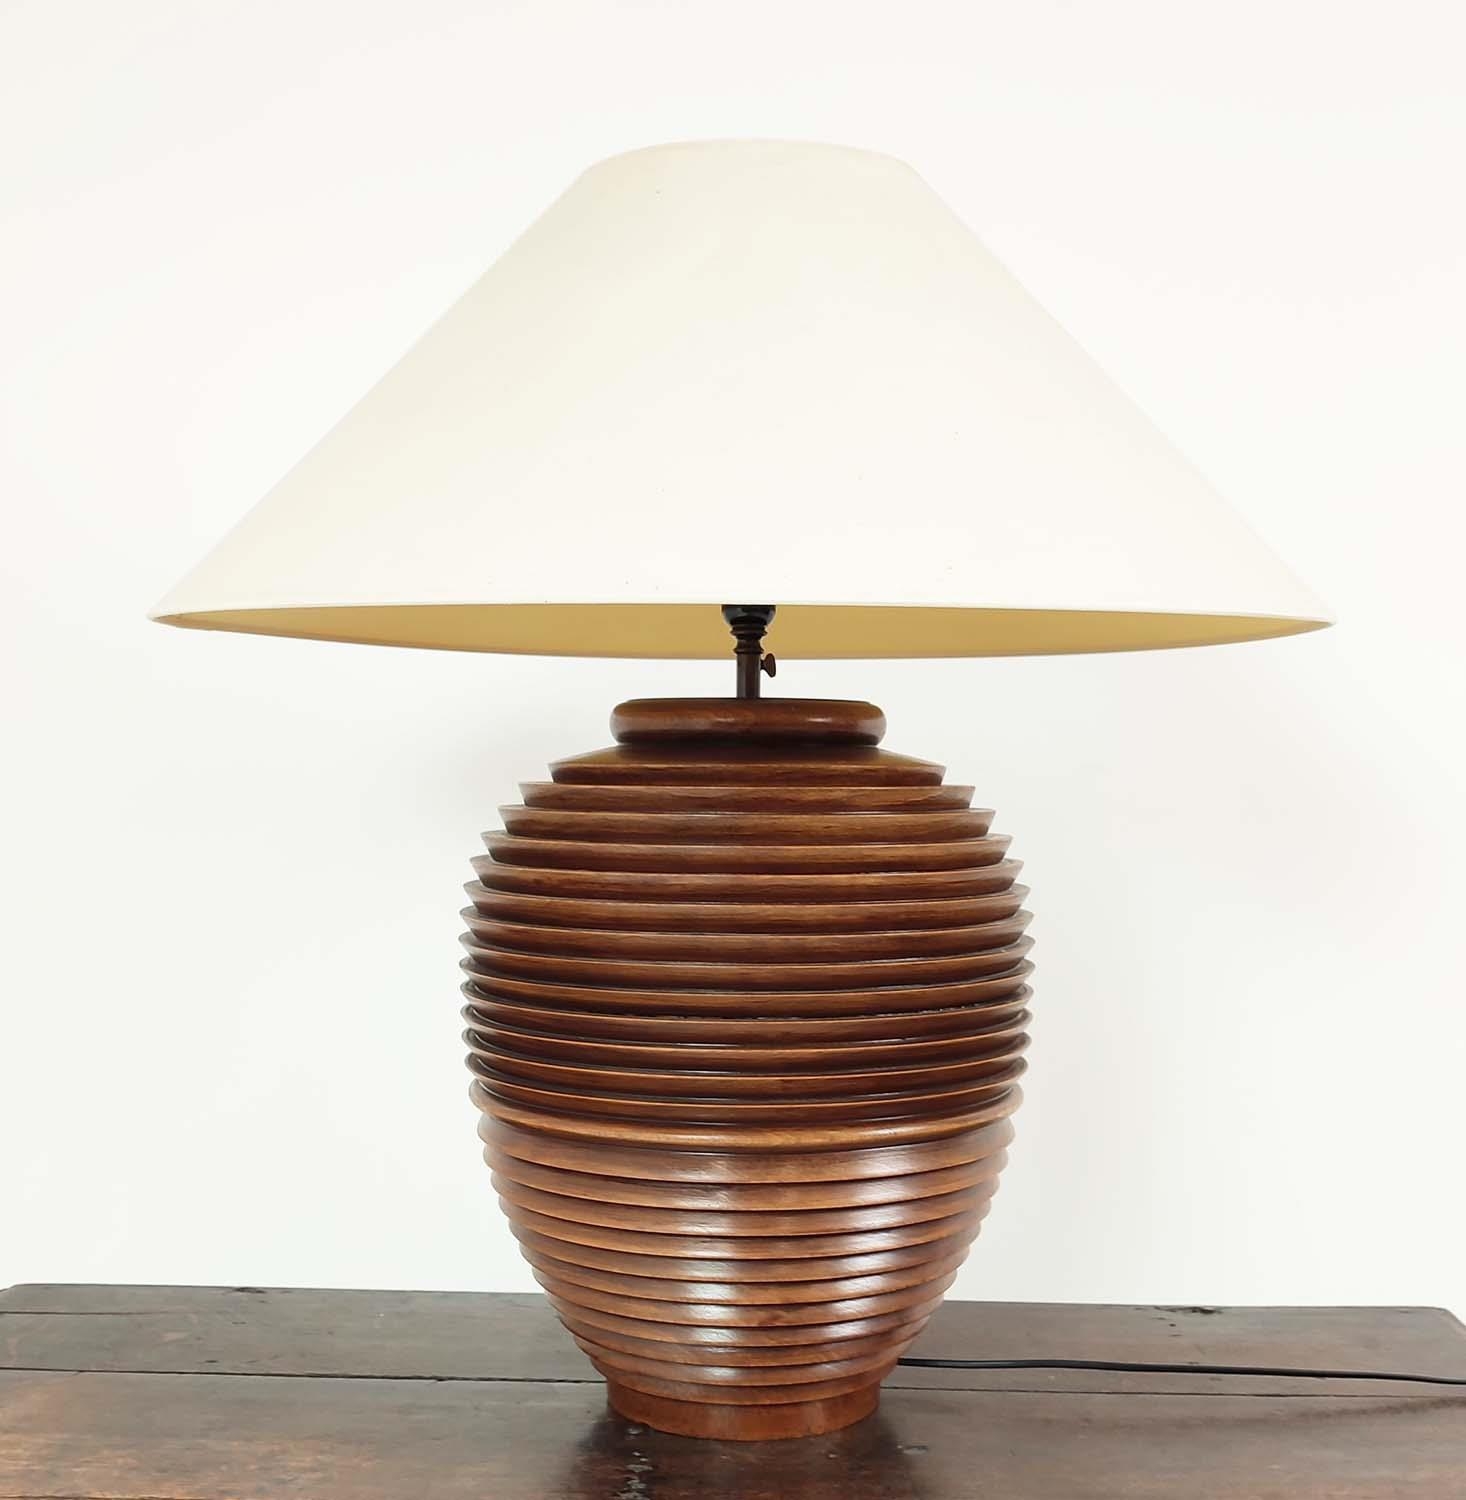 LUZ INTERIORS TABLE LAMP, 83cm H x 68cm W including shade.